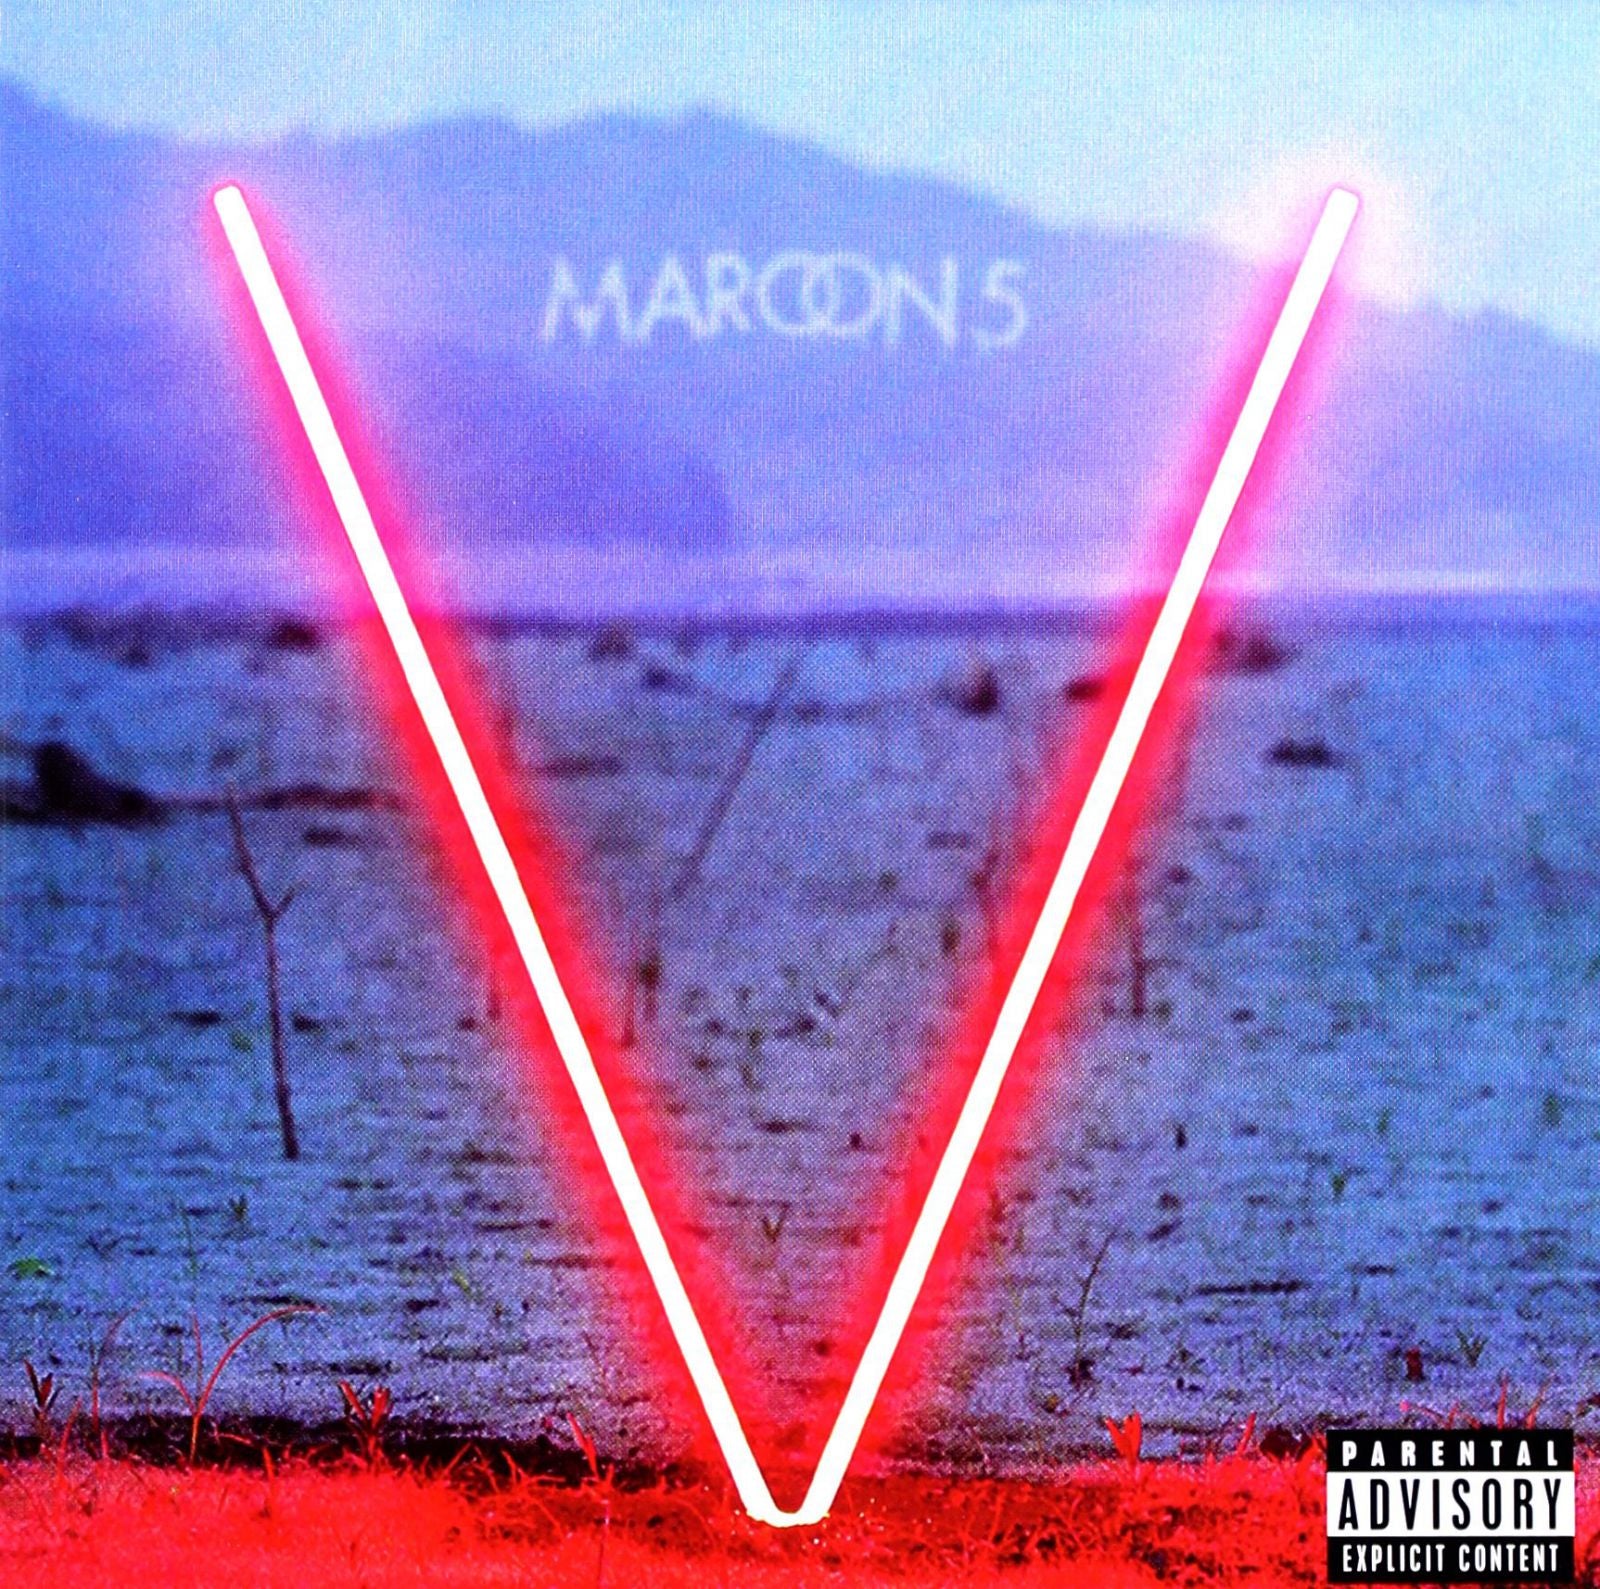 CD Maroon 5 - V Deluxe